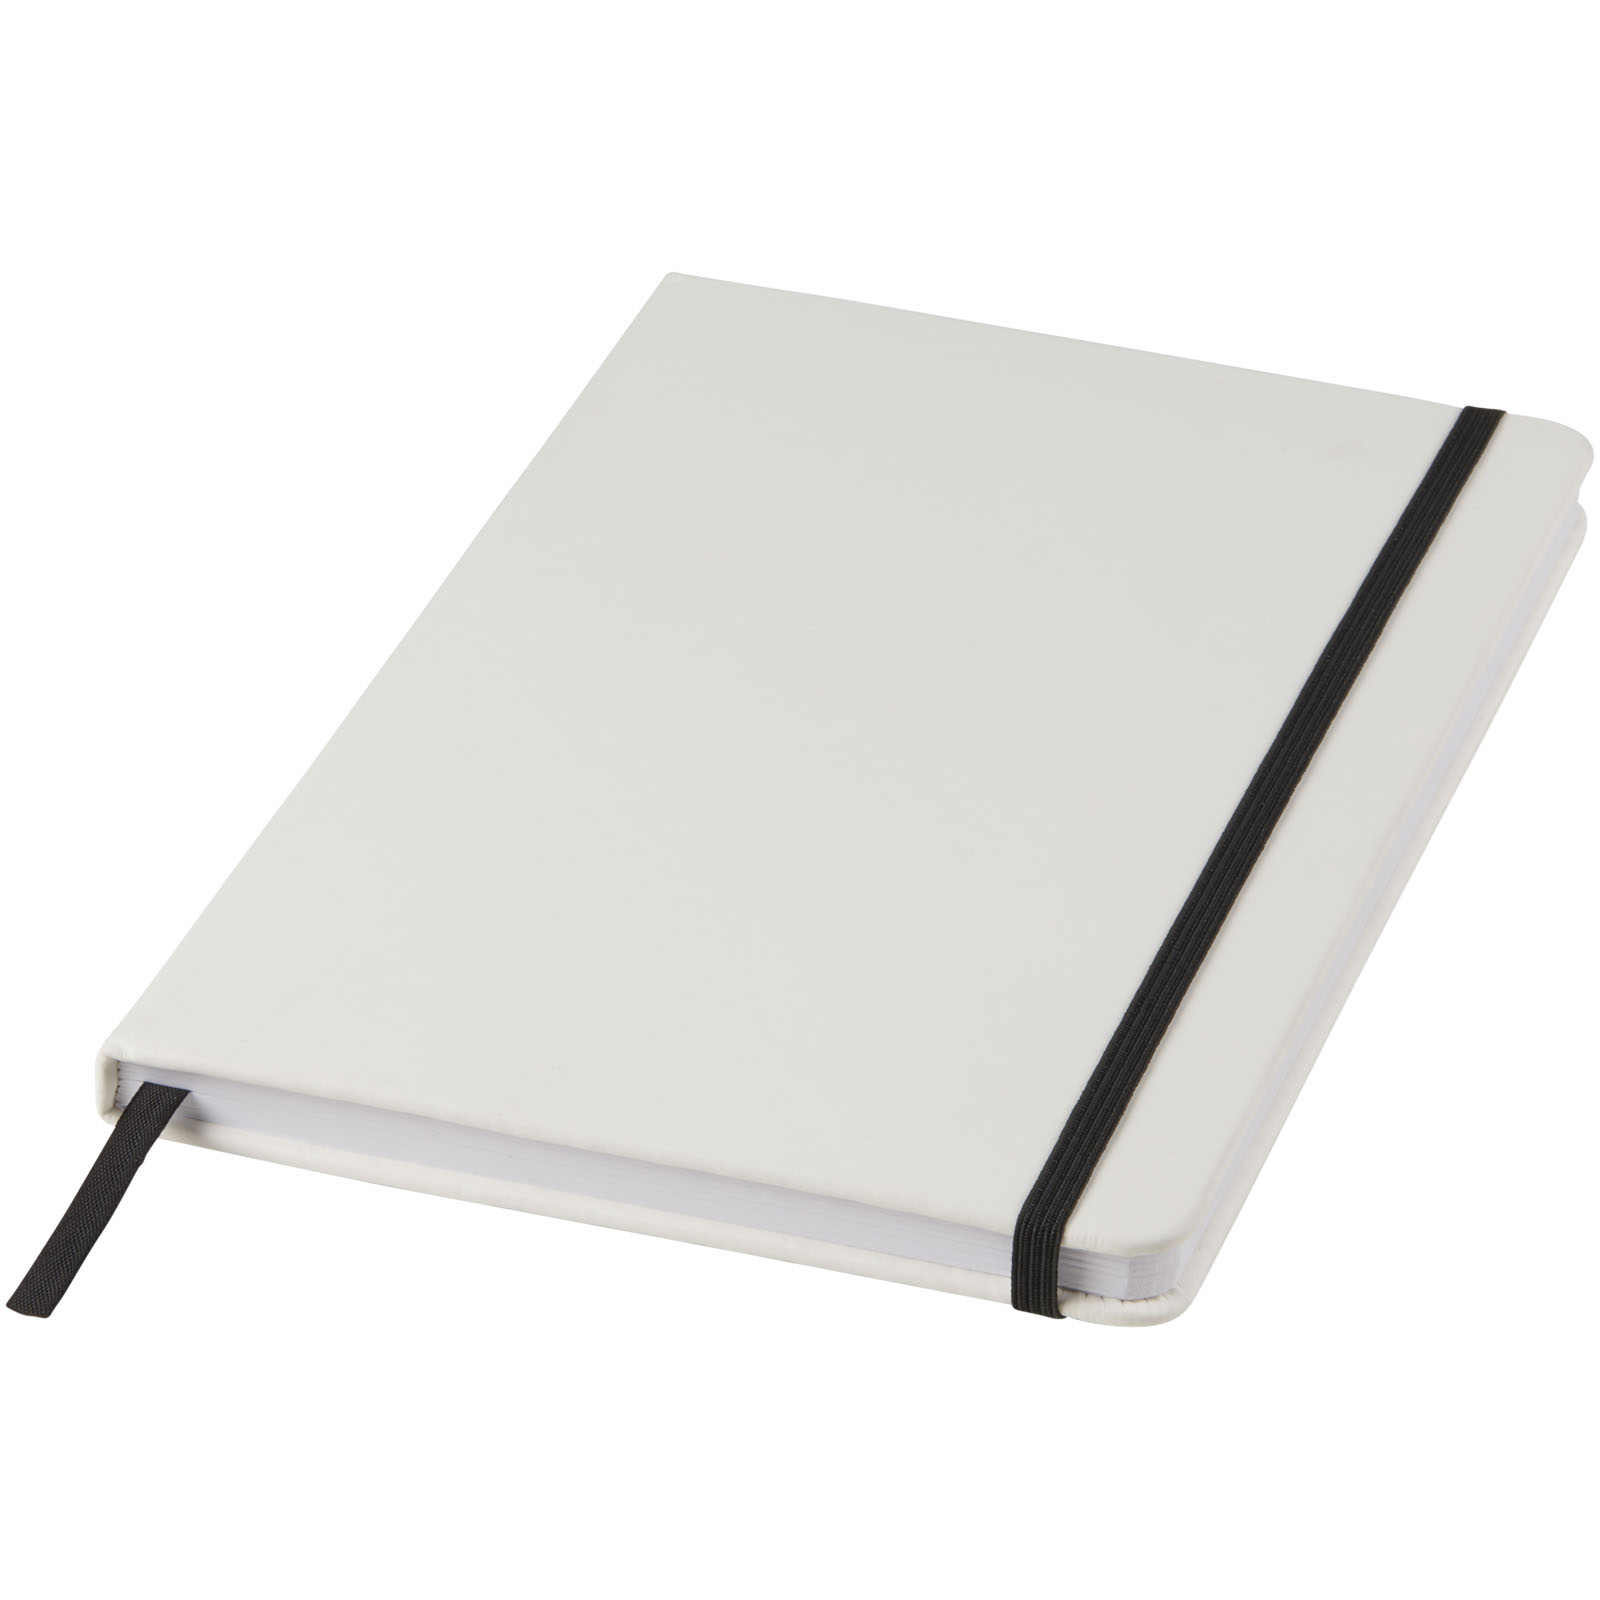 Notebooks & Desk Essentials - Spectrum A5 white notebook with coloured strap